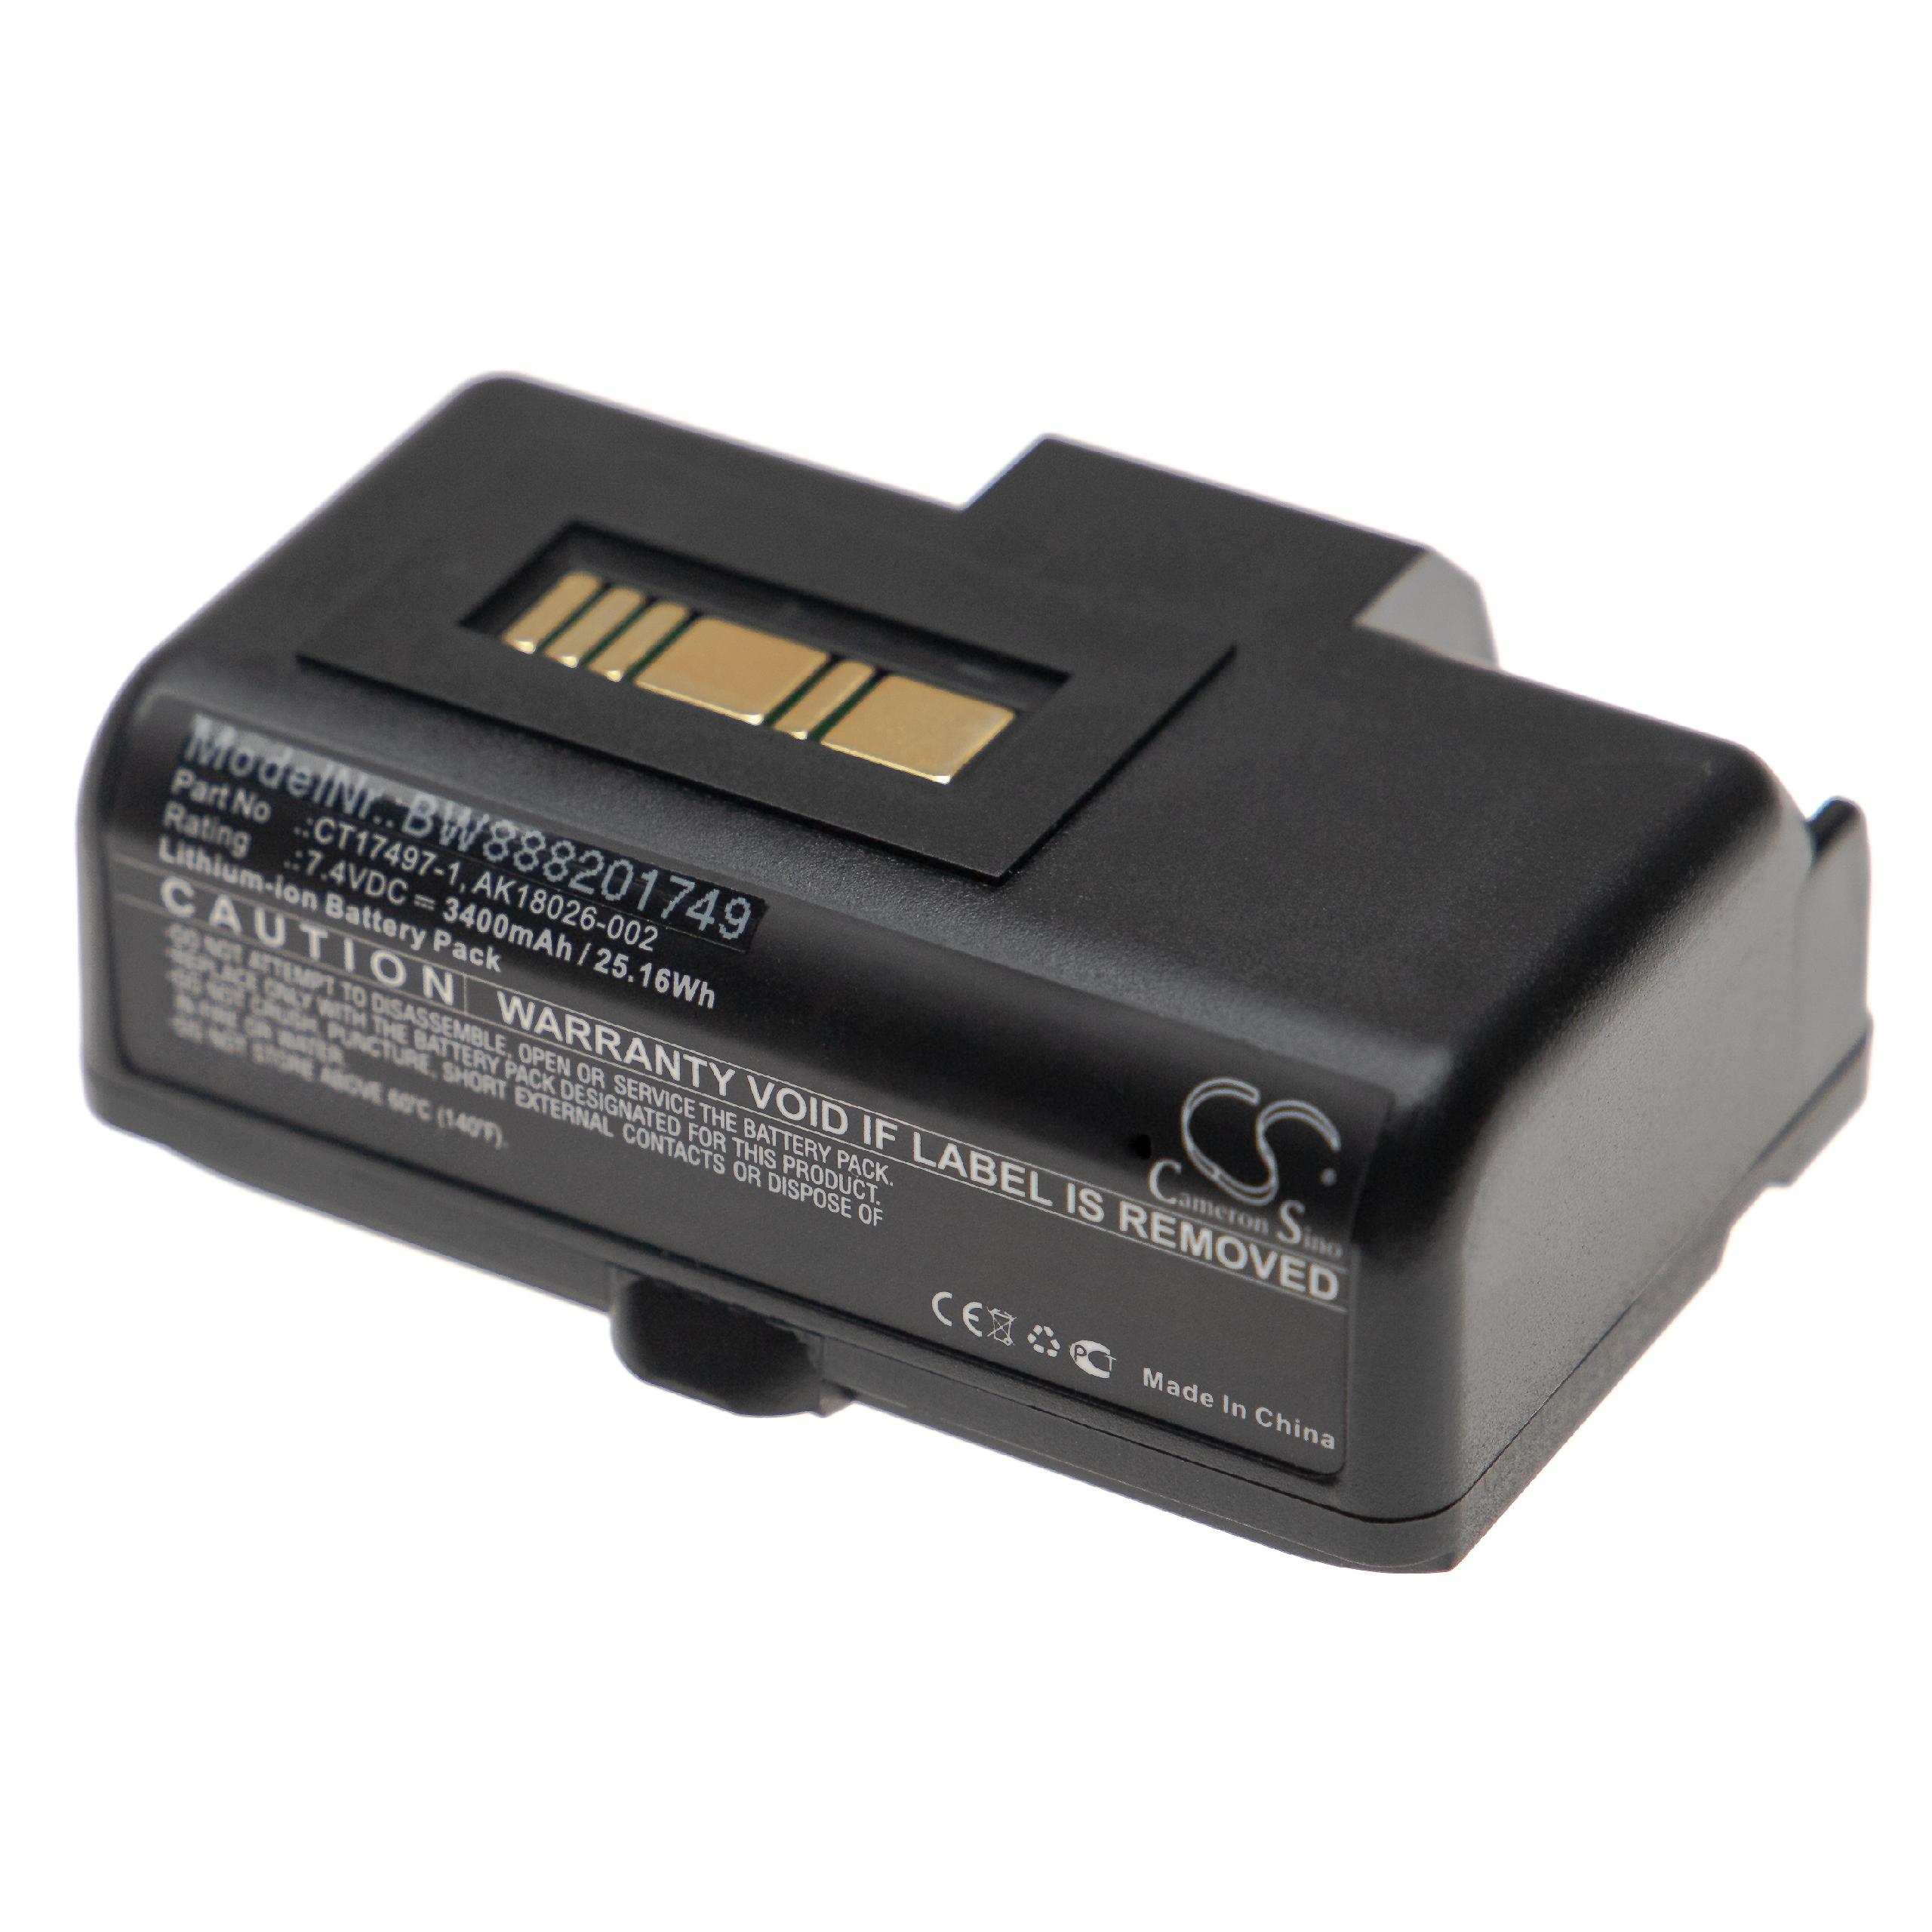 Akumulator do drukarki / drukarki etykiet zamiennik Zebra AK18026-002, CT17497-1 - 3400 mAh 7,4 V Li-Ion